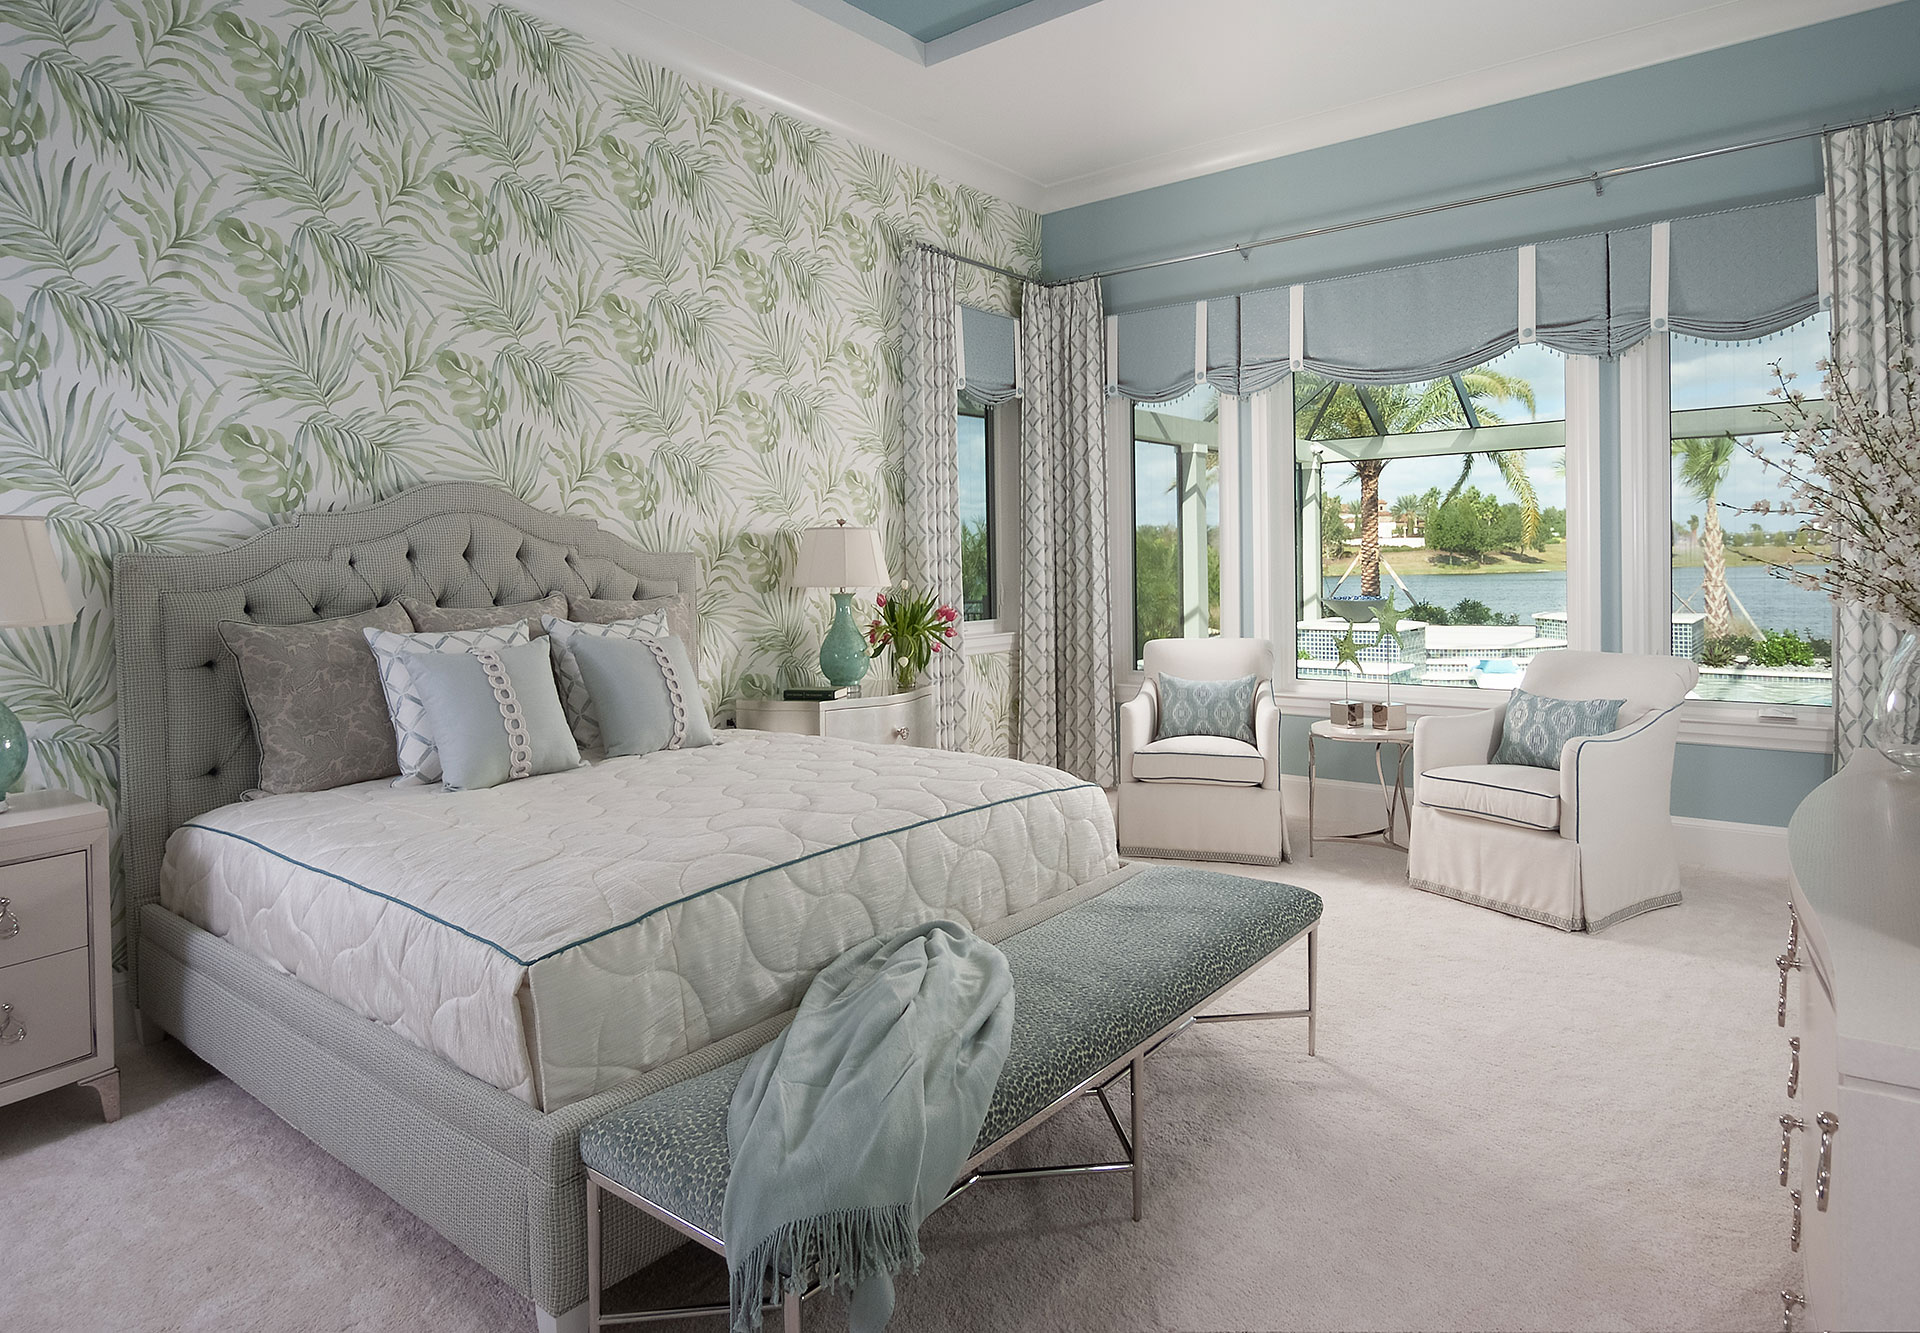 6 Luxury Bedroom Design Ideas